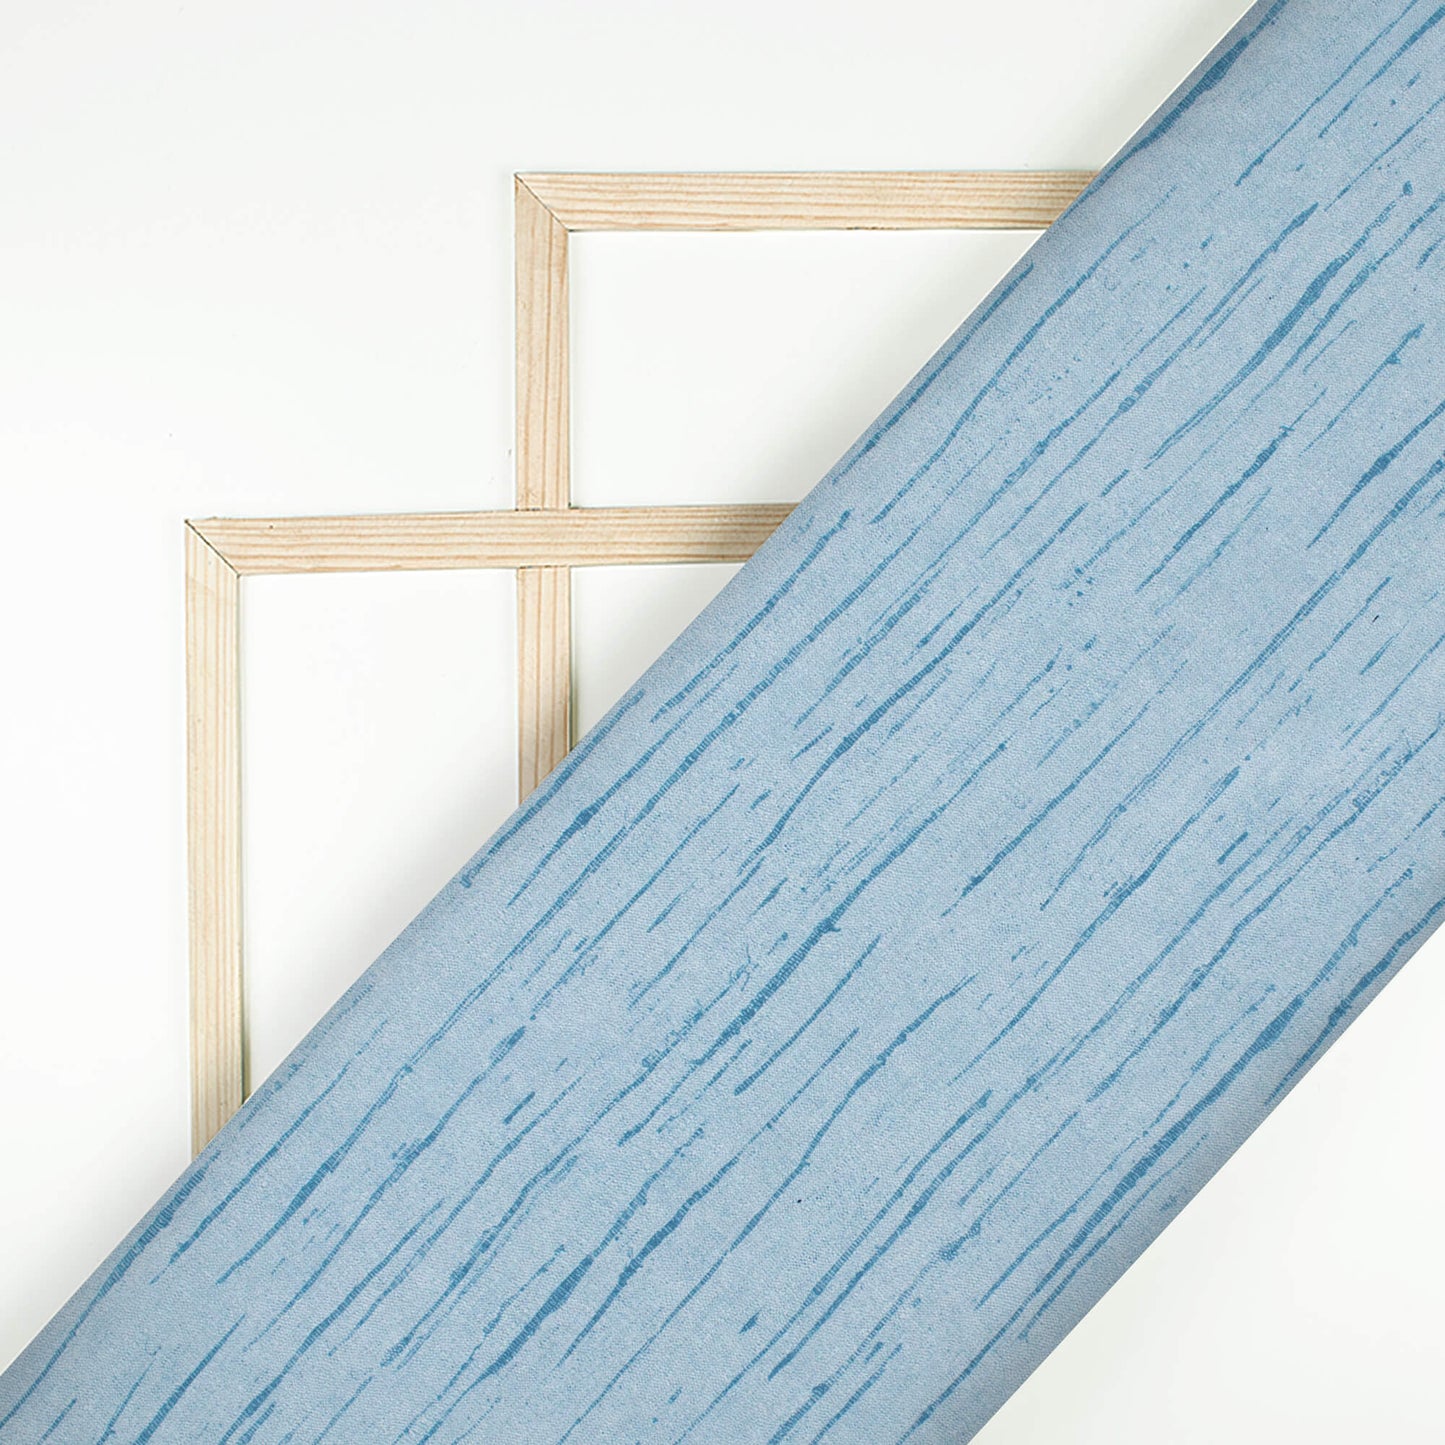 Slate Blue Textured Pattern Digital Print Crepe Silk Fabric